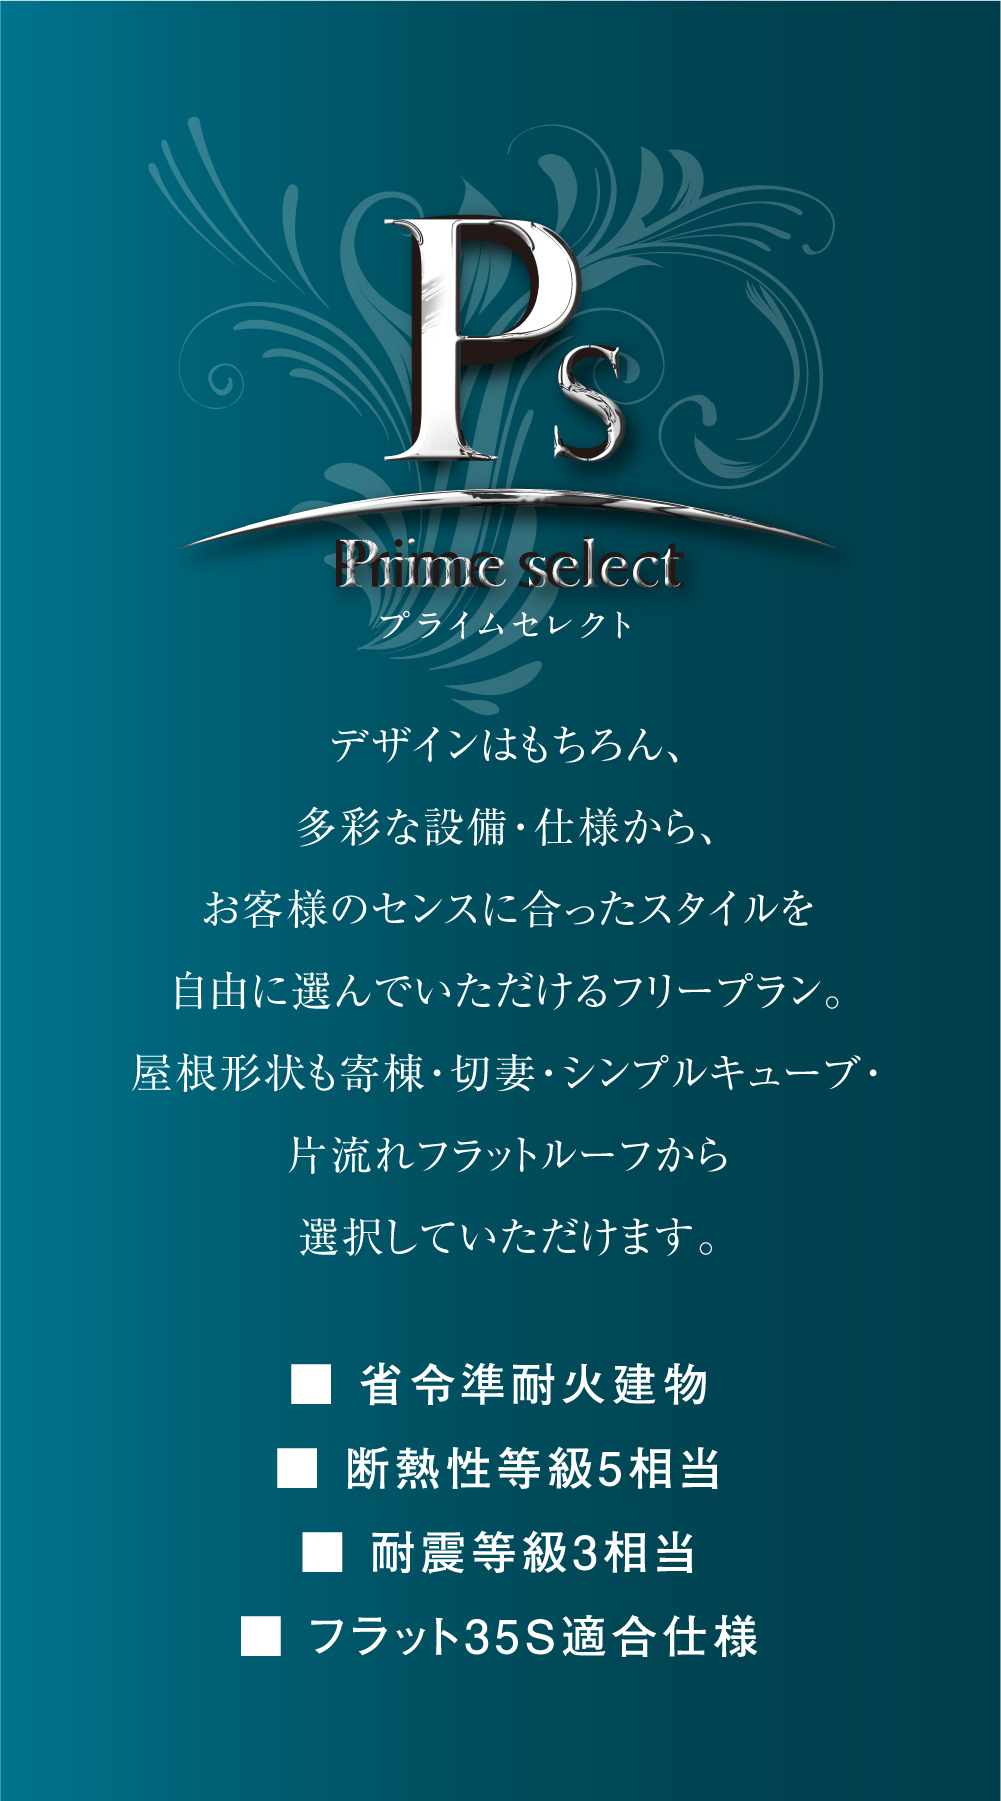 Prime select